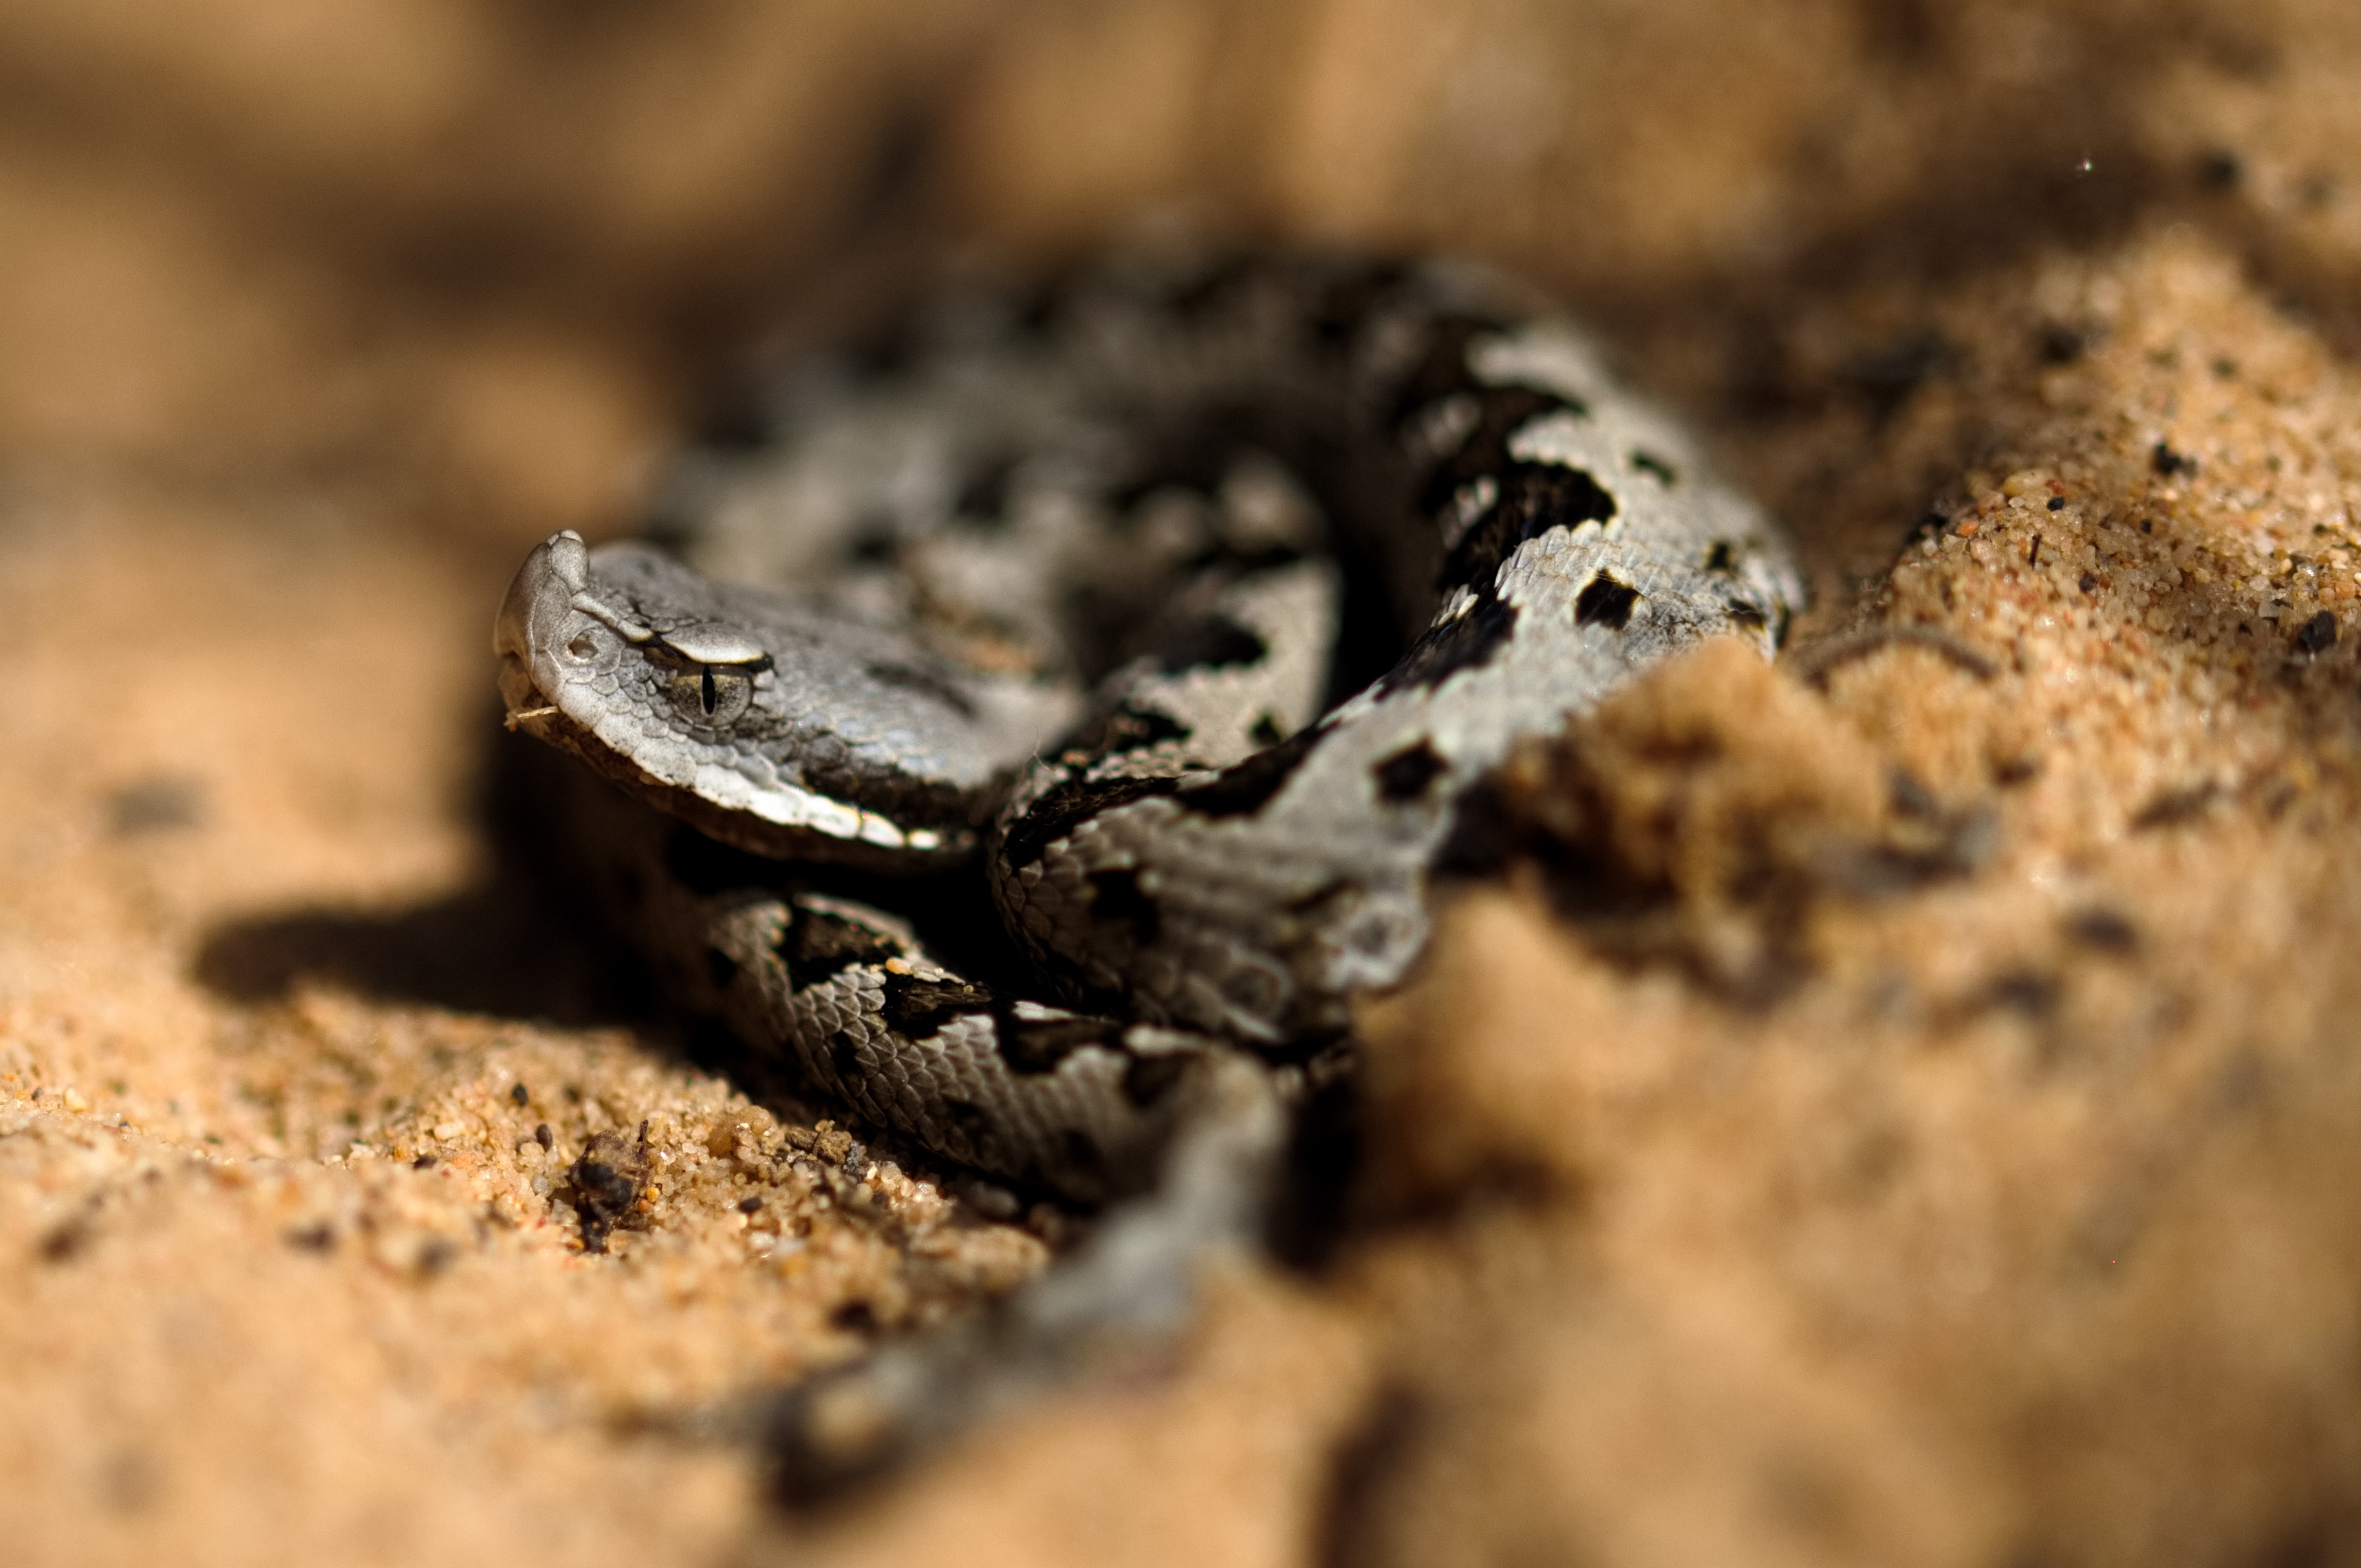 juvenil of V. latastei at Doñana Biological Reserve. Author: Mizar Torrijo-Salesa